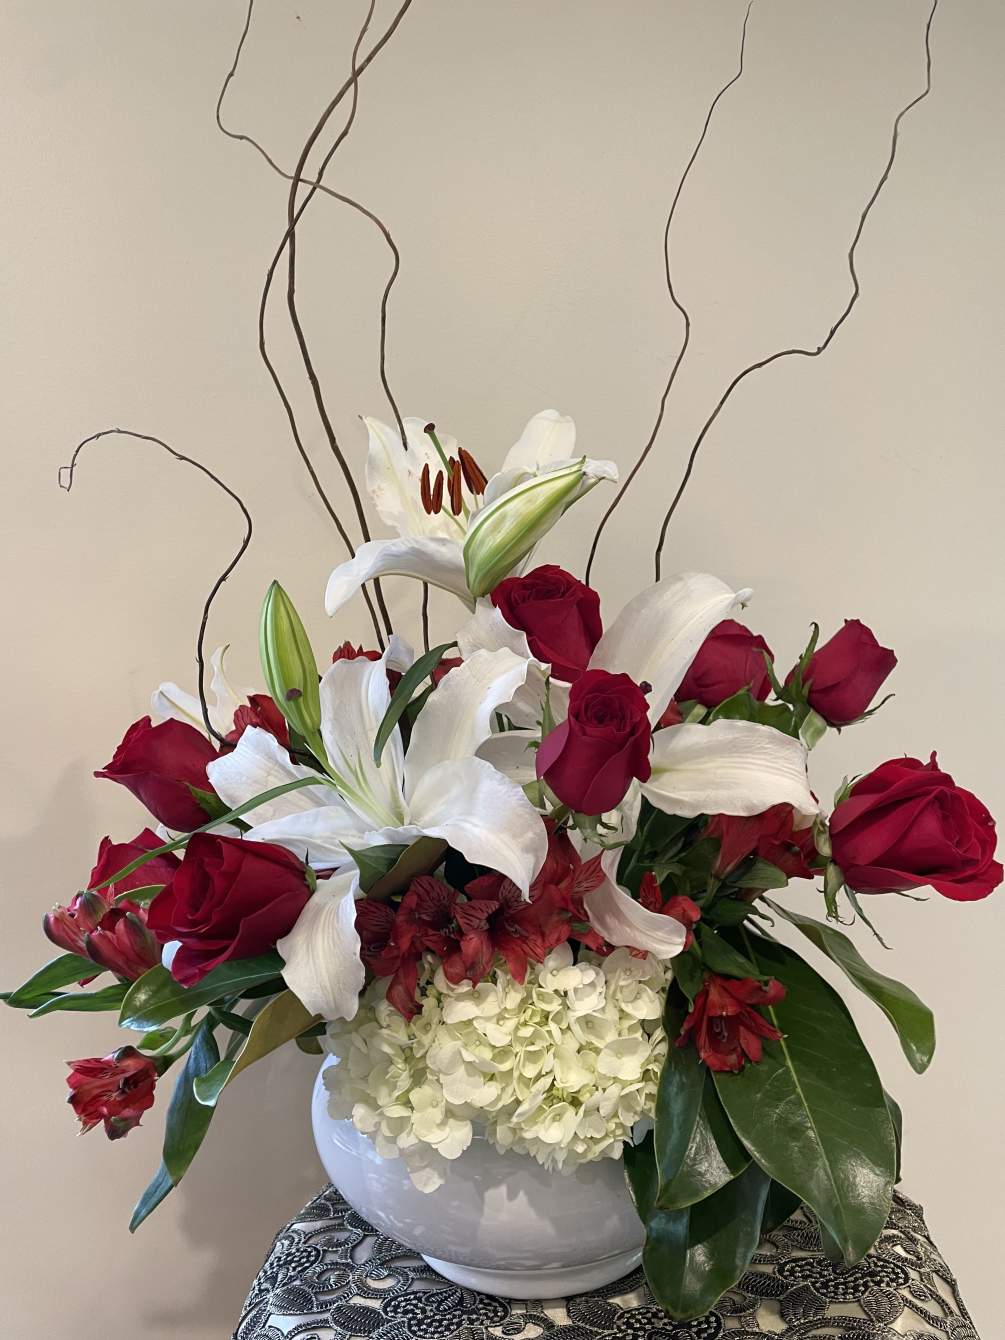 White hydrangeas, red roses, white lilies and alstromeria